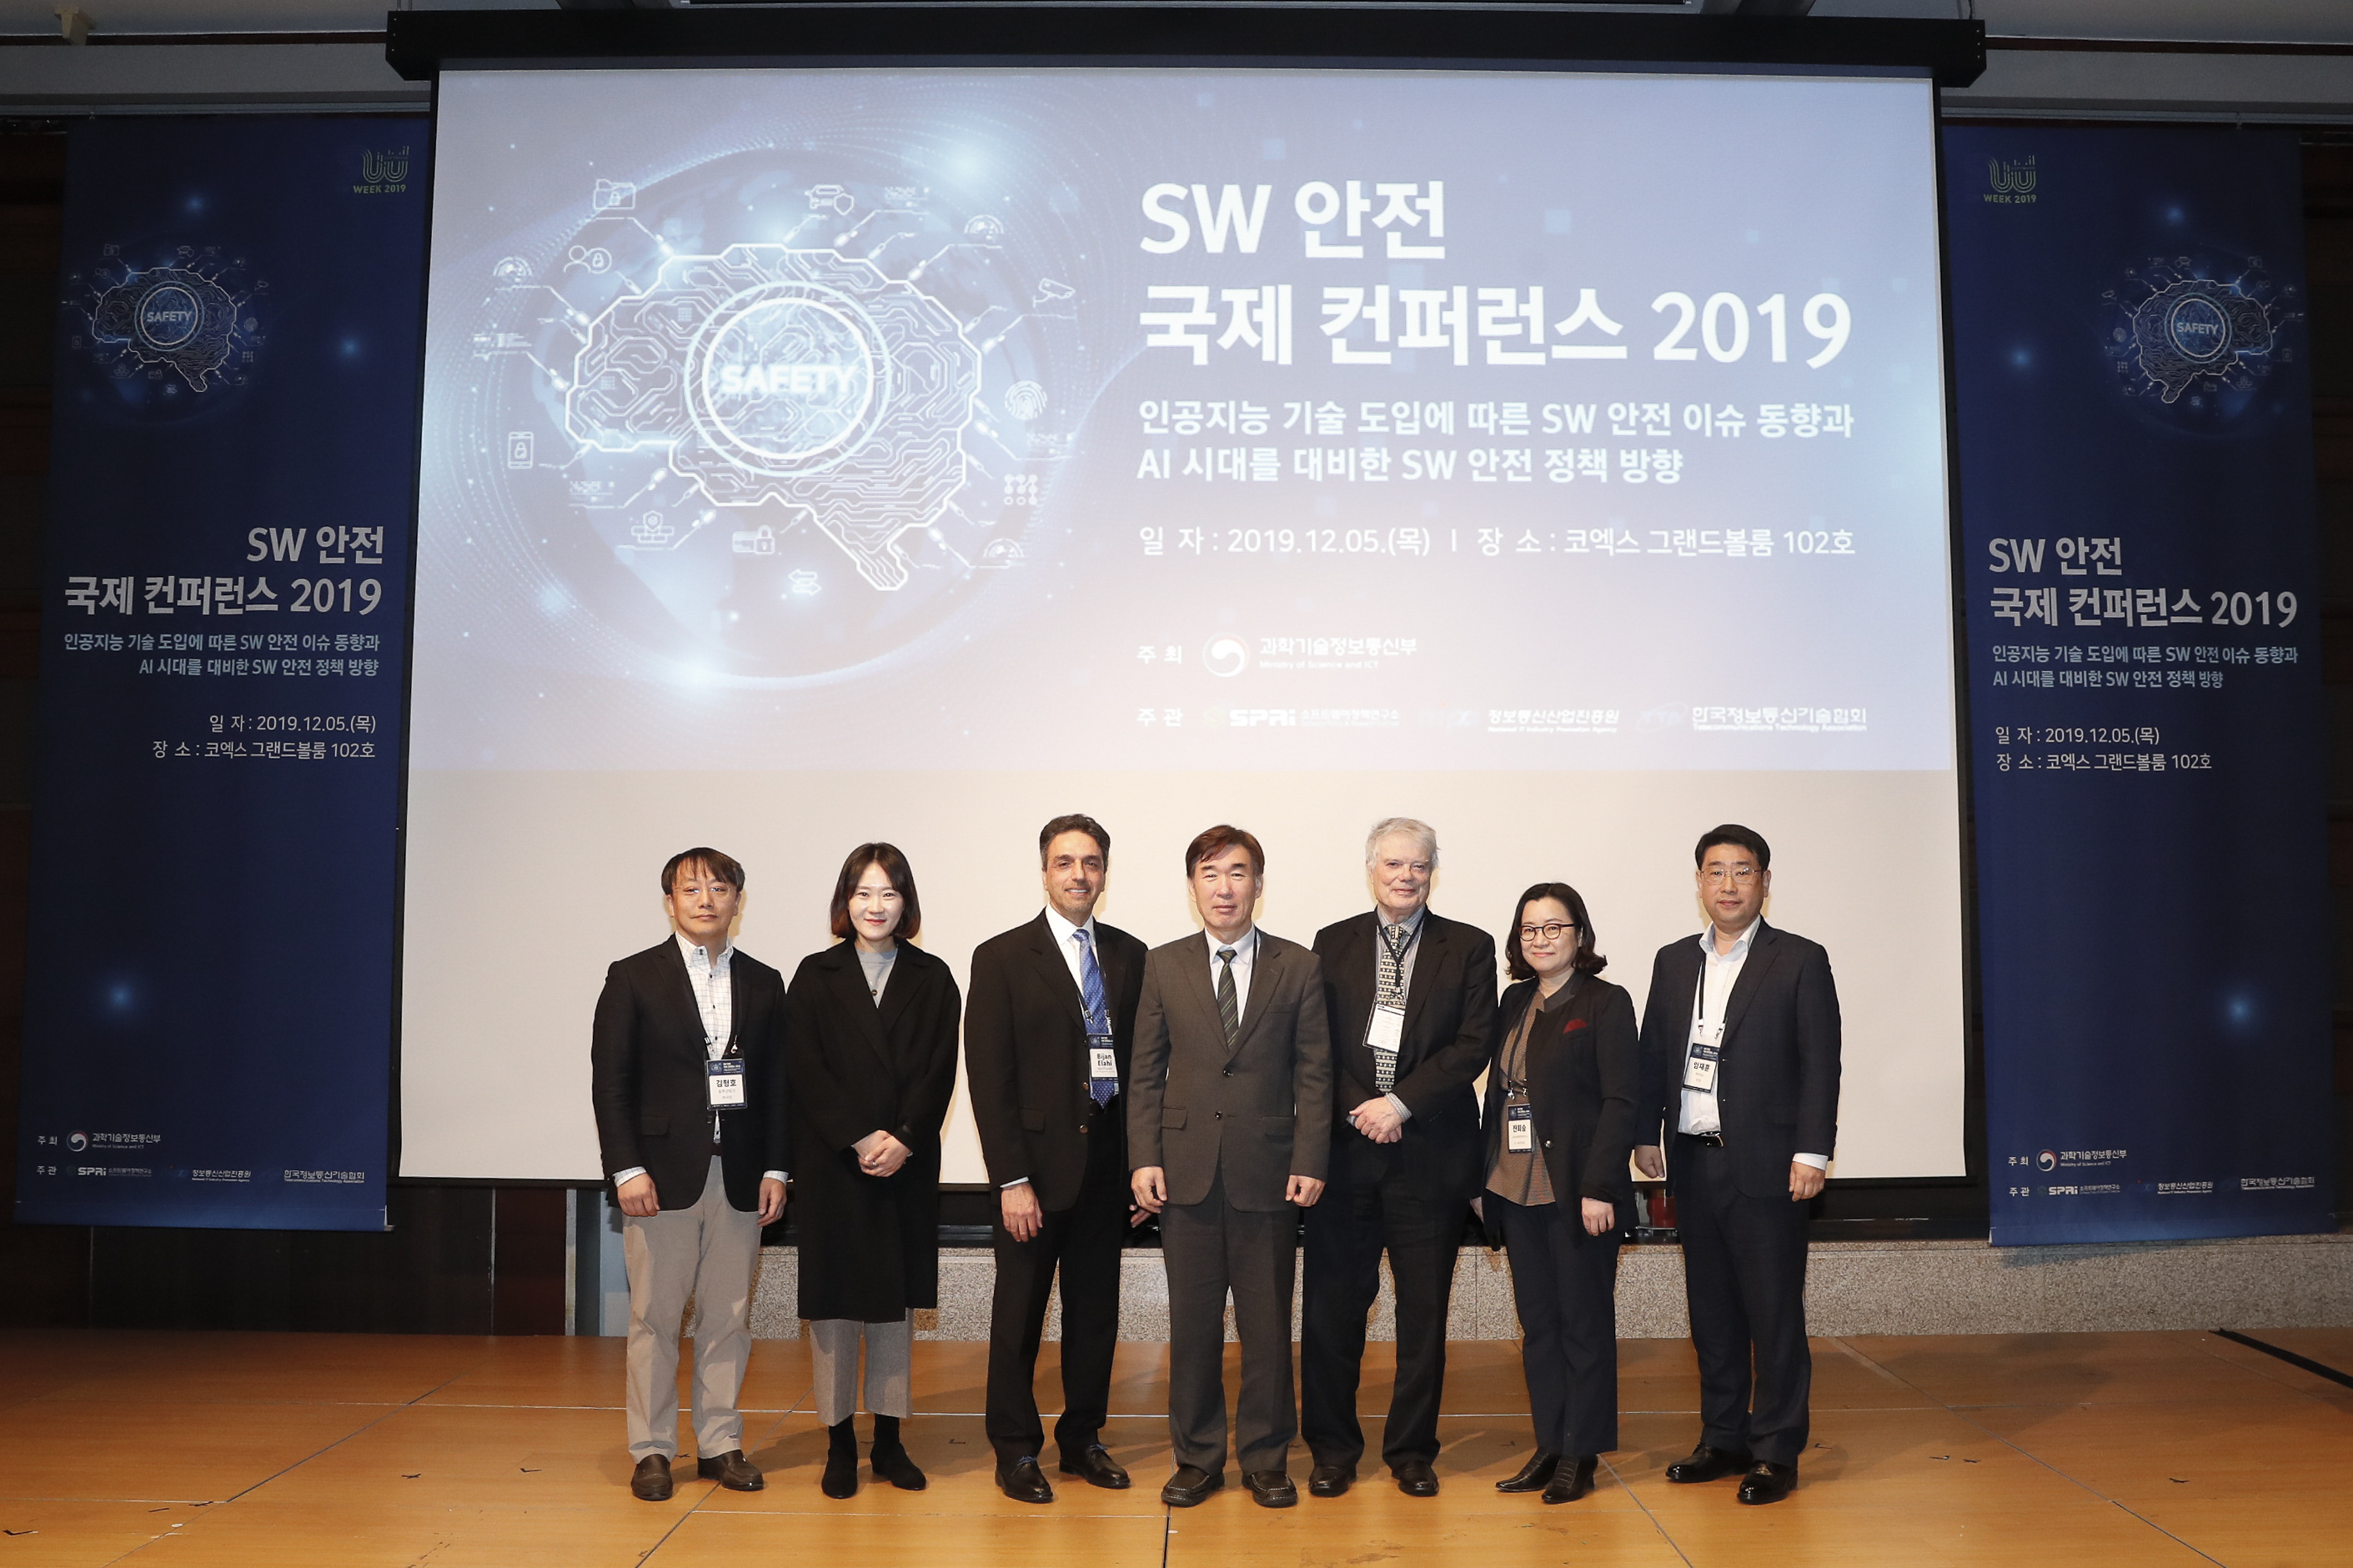 SW 안전 컨퍼런스 2019 결과 4